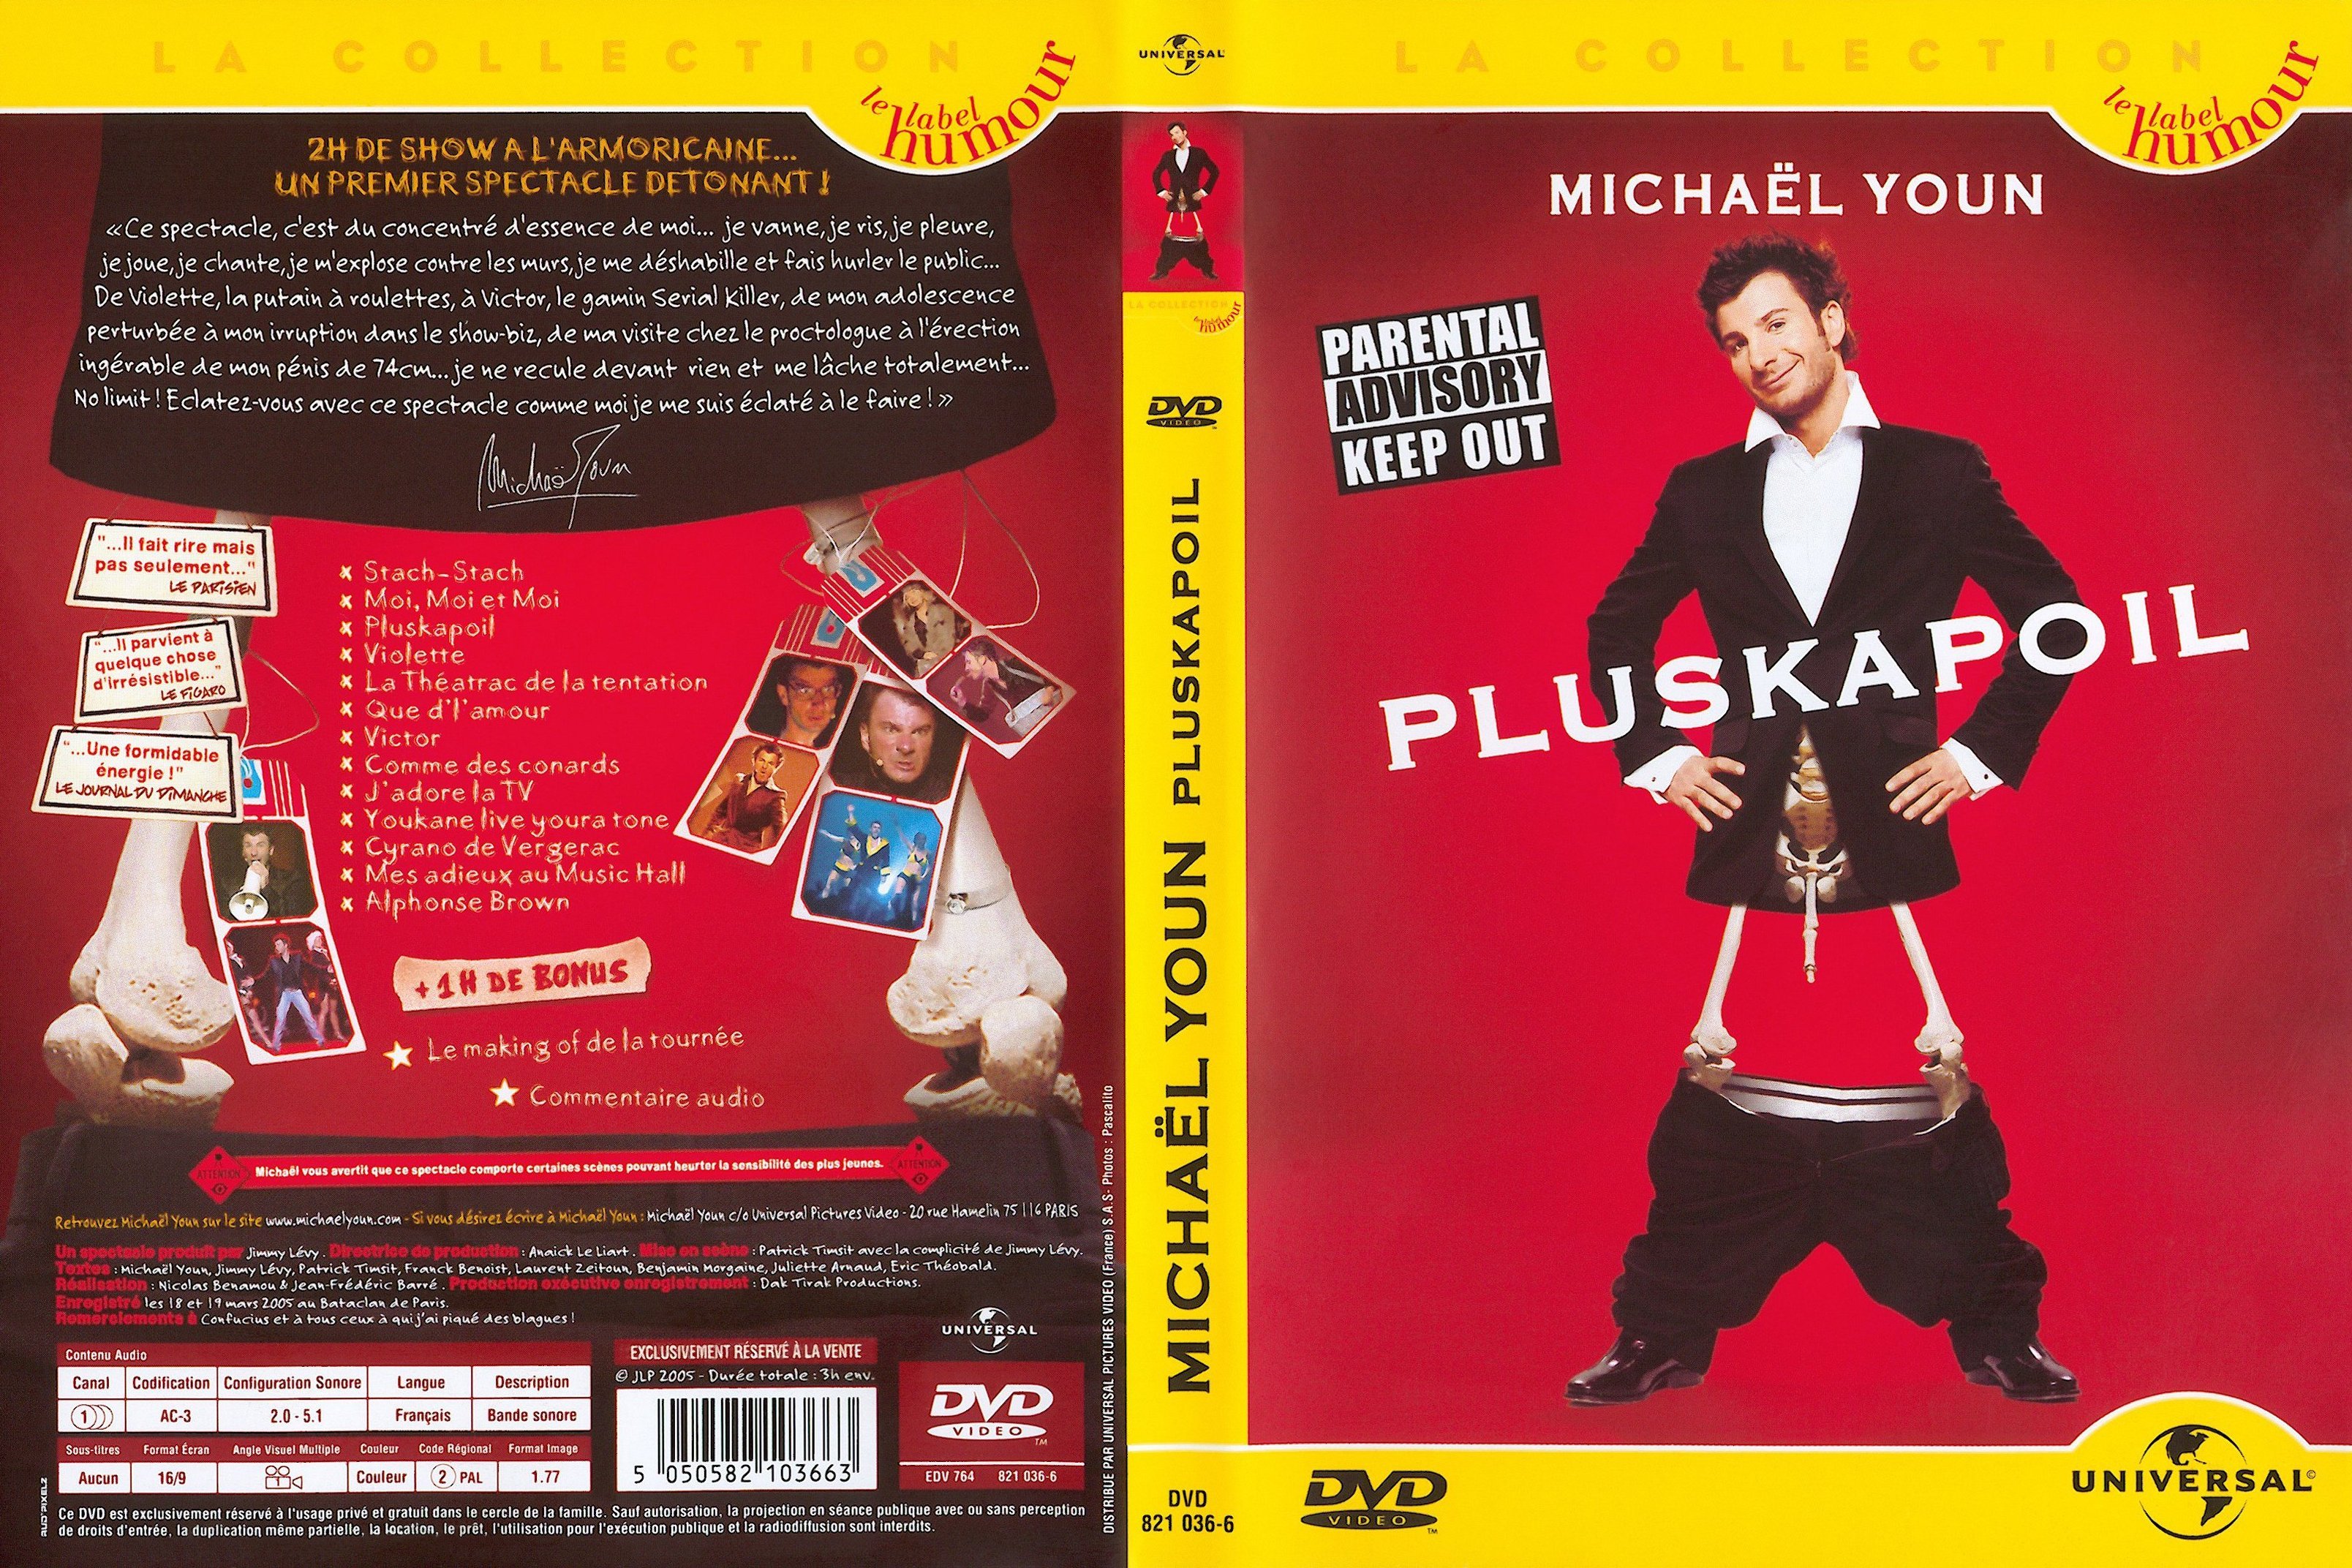 Jaquette DVD Michael Youn pluskapoil